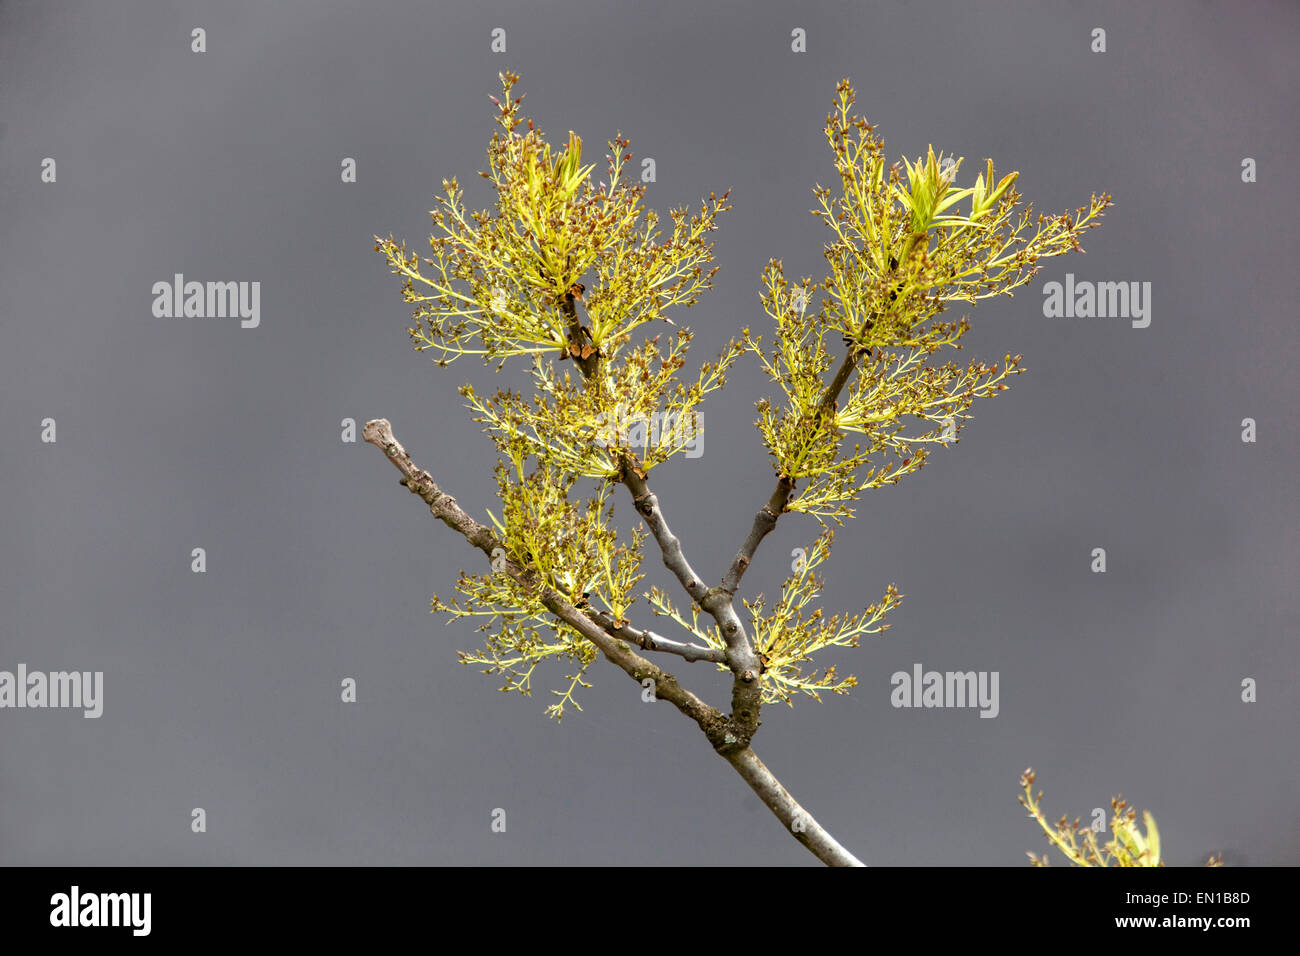 European Ash tree bud flower, Fraxinus excelsior Flowers budding Stock Photo